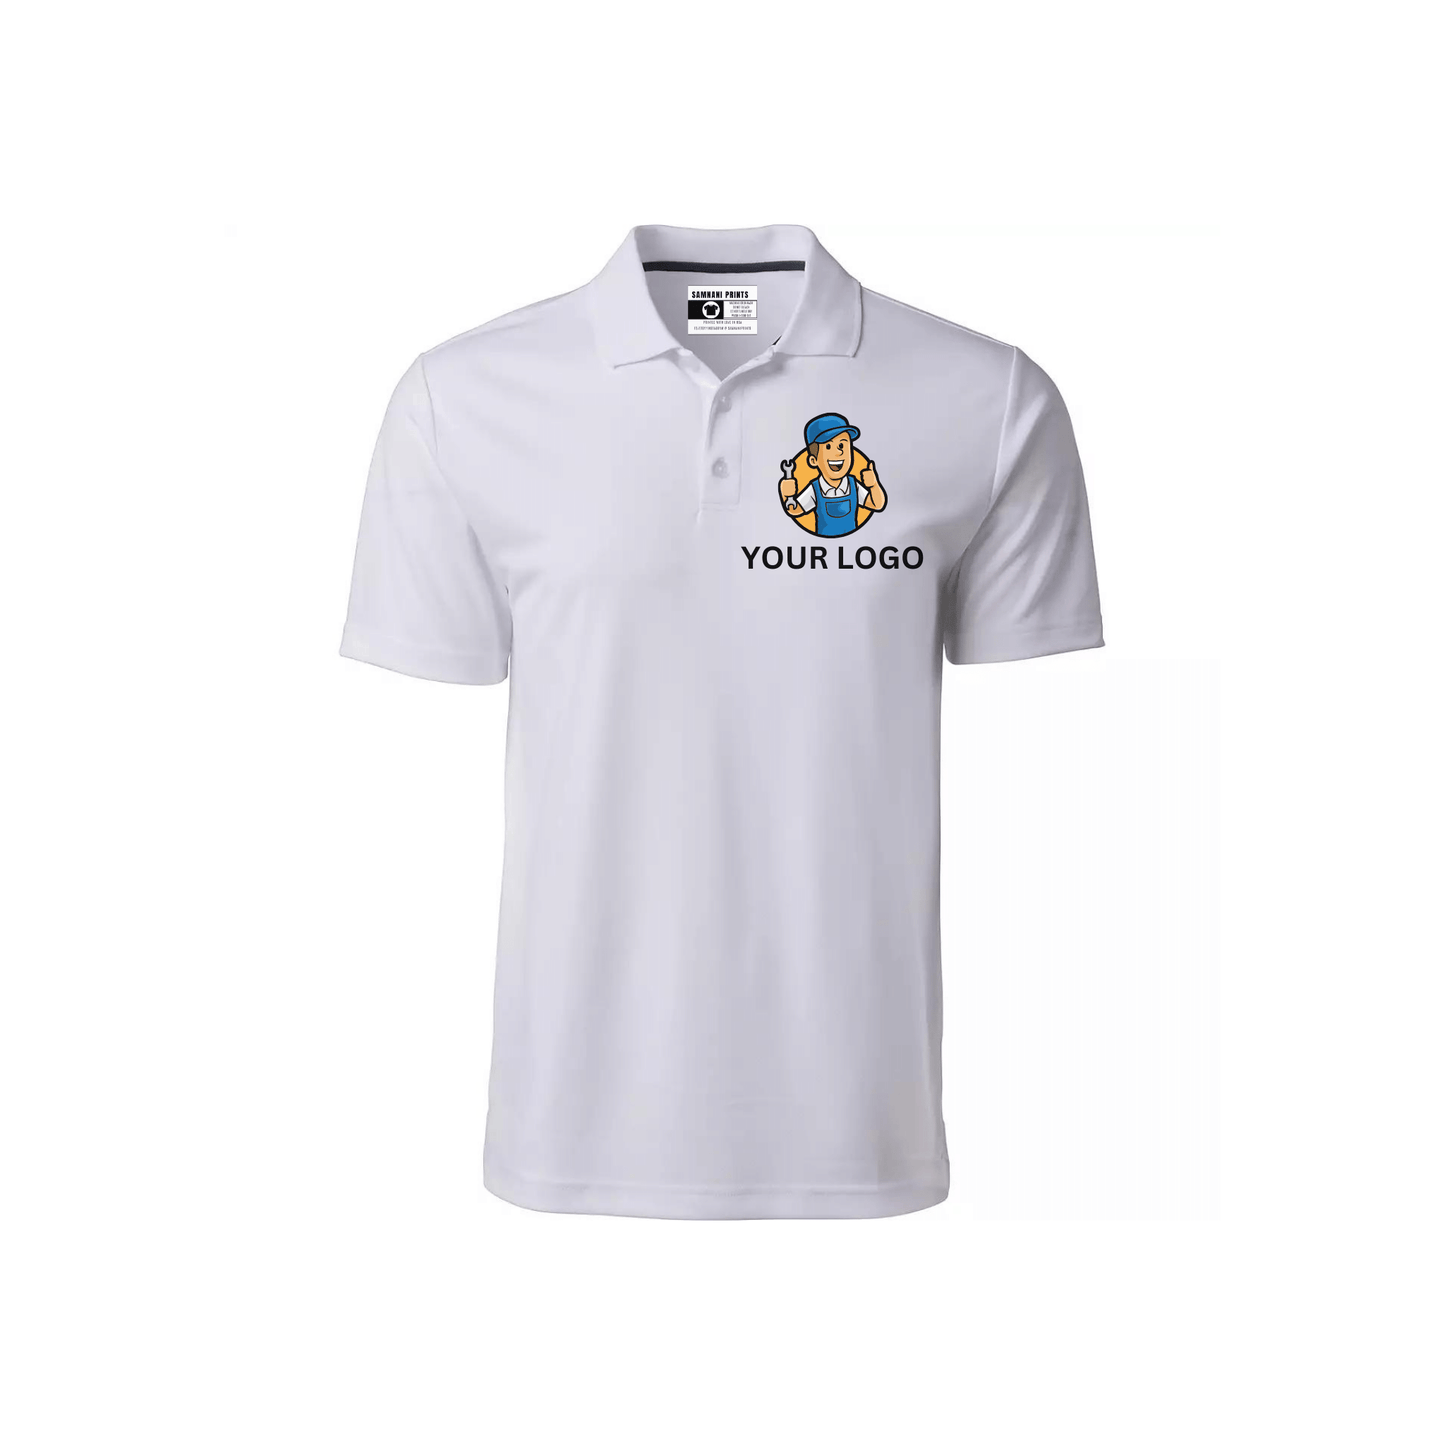 Business Polo's Shirt for everyday Wearing Sweatproof, Business shirt for Boss, Employee Professional collar shirt, Moisture-wicking shirt